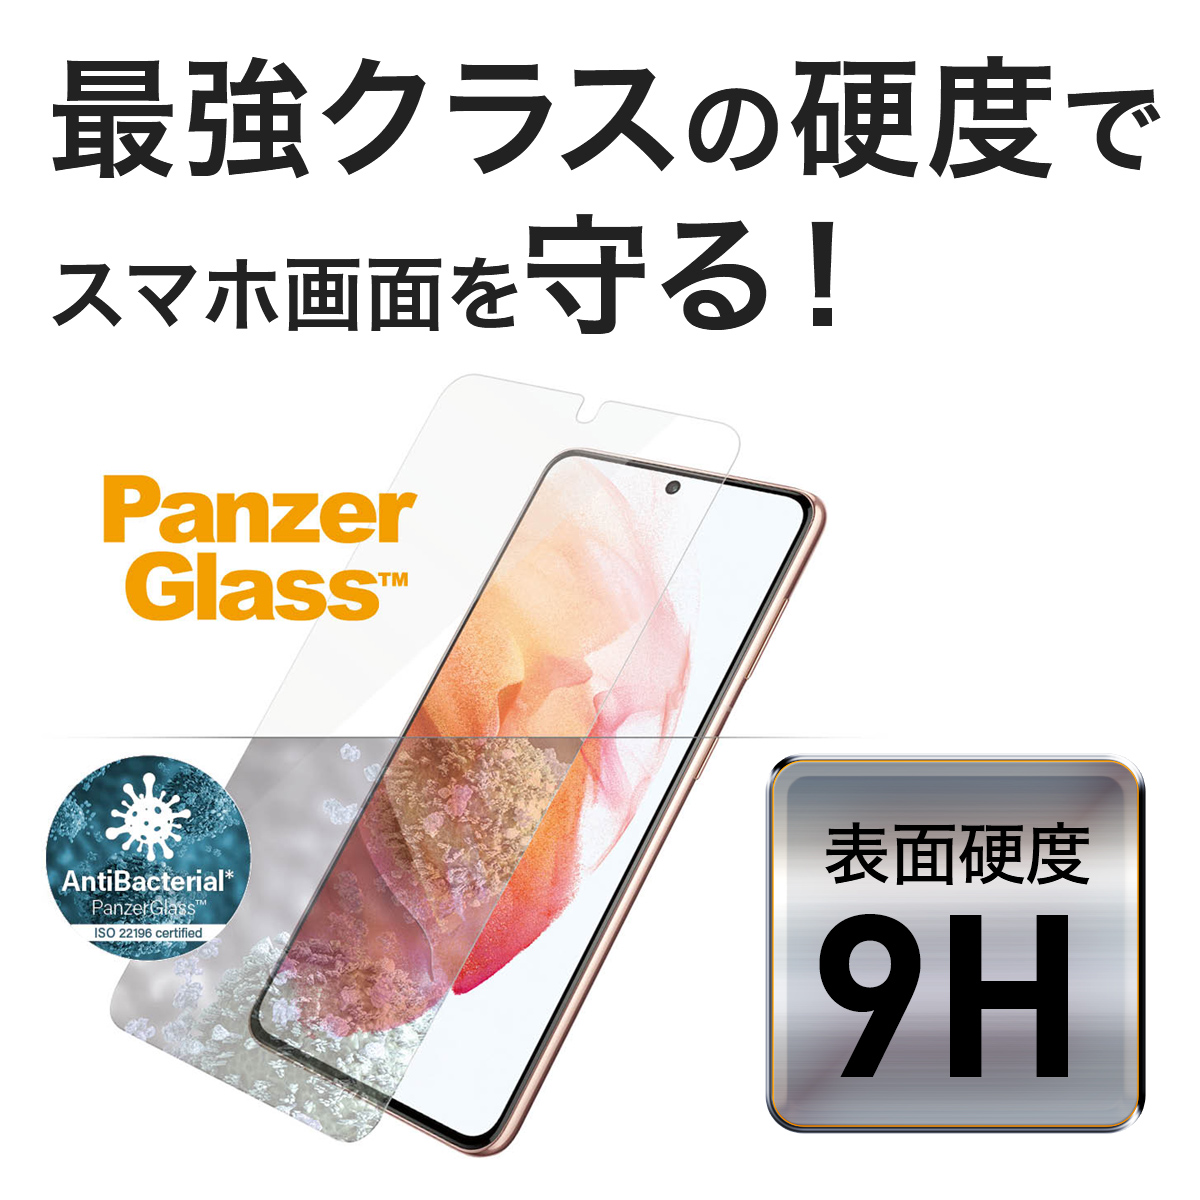 PanzerGlass PC Filter 15inch 覗き見防止フィルム